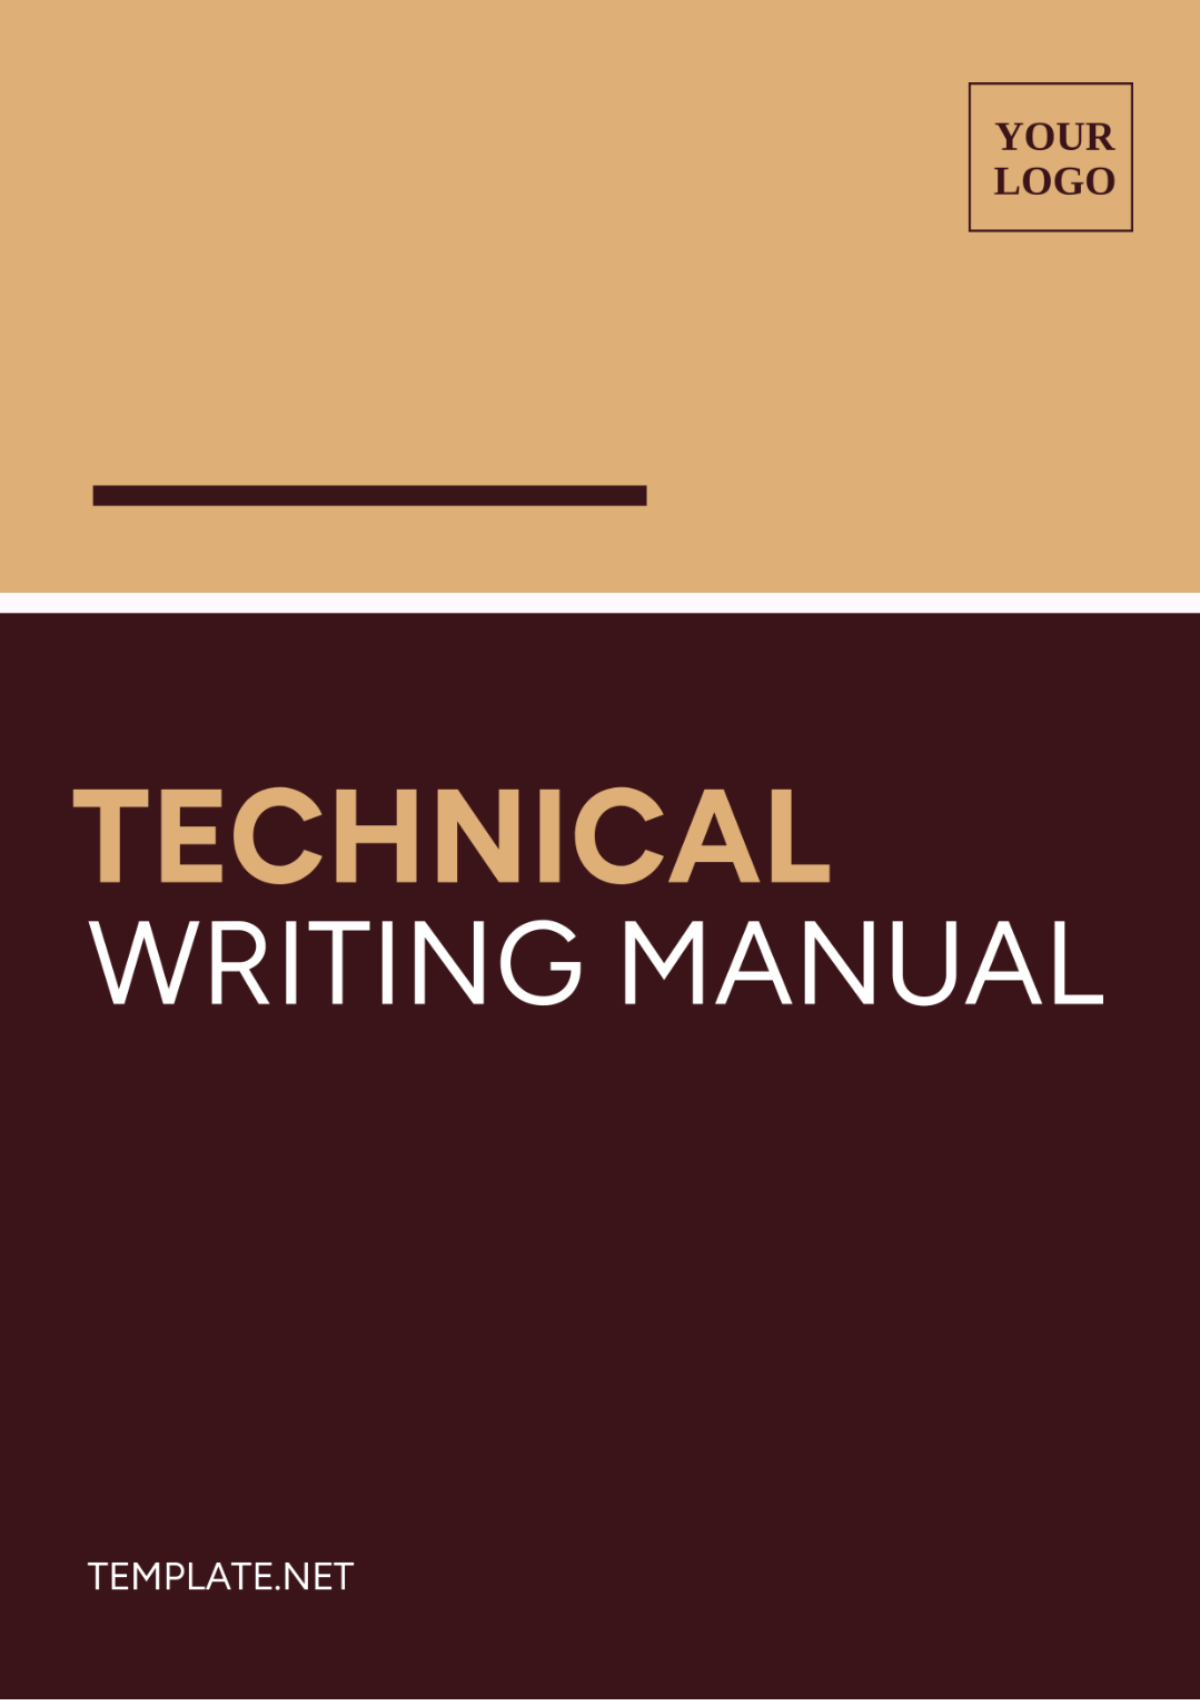 Technical Writing Manual Template